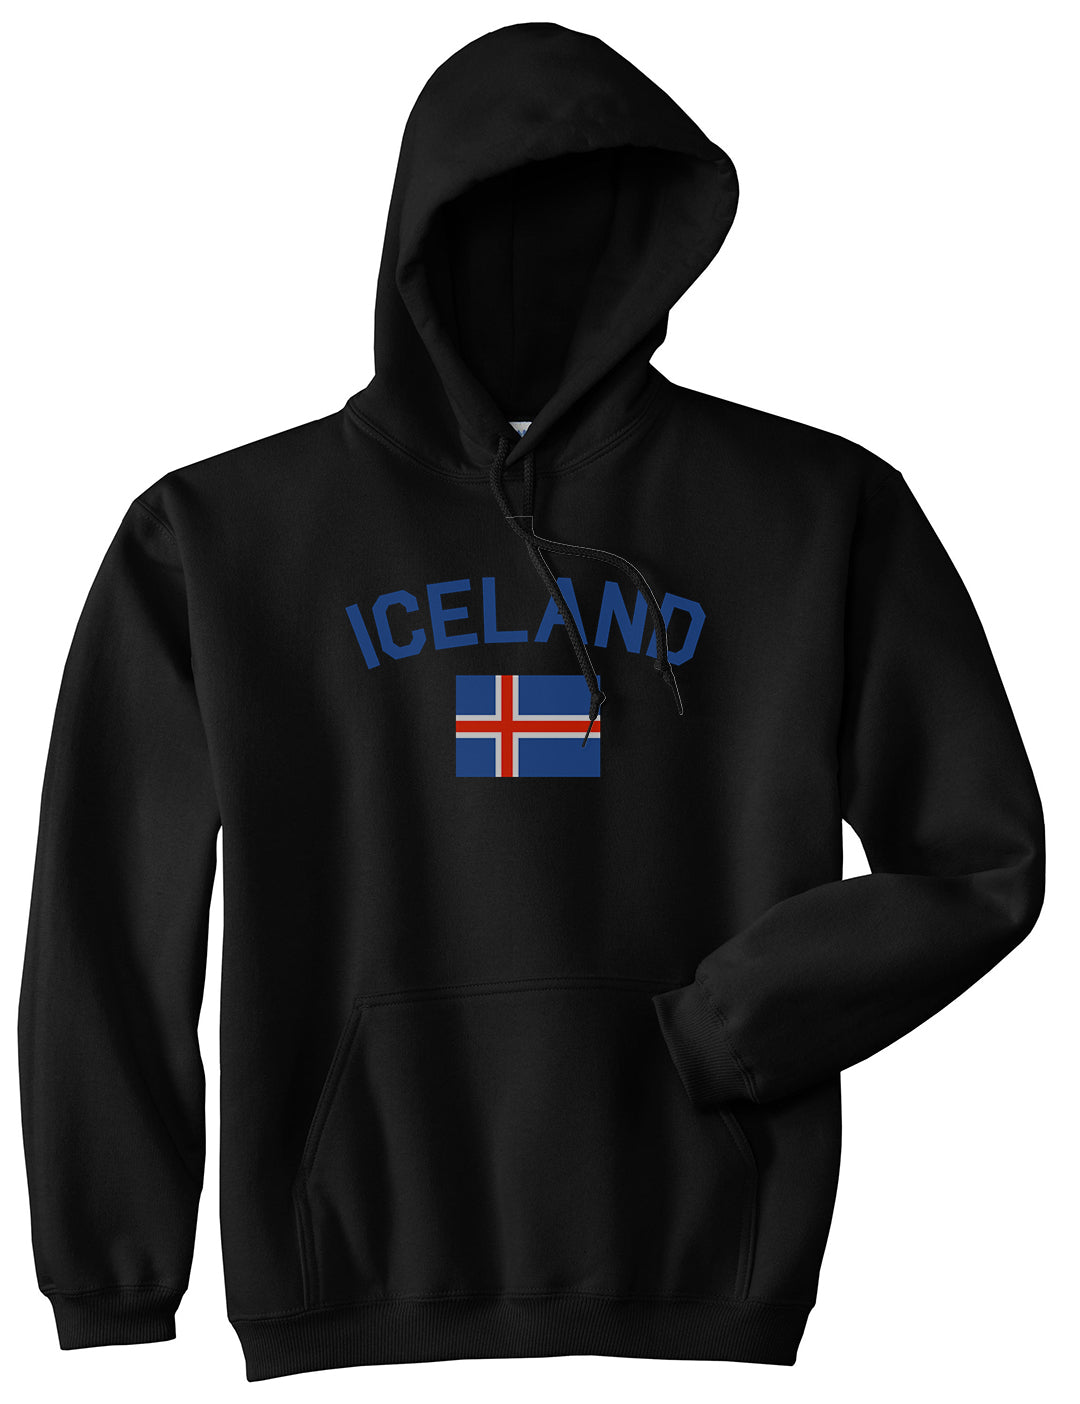 Iceland With Icelandic Flag Souvenir Mens Pullover Hoodie Black